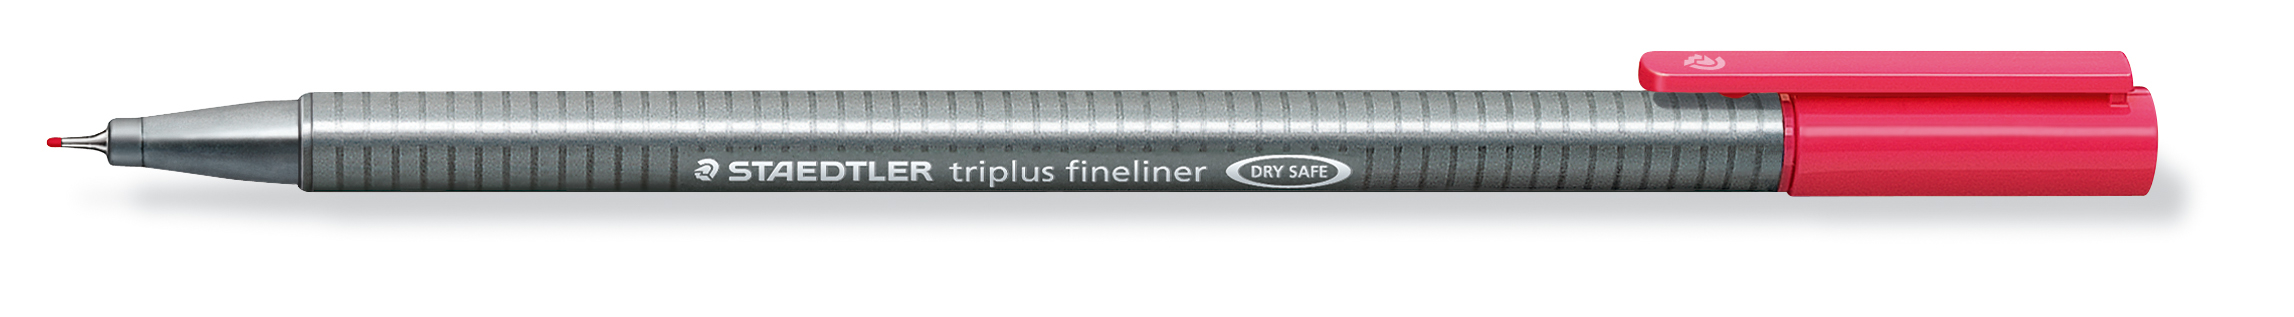 STAEDTLER Triplus Fineliner 0,3mm 334-23 bordeaux